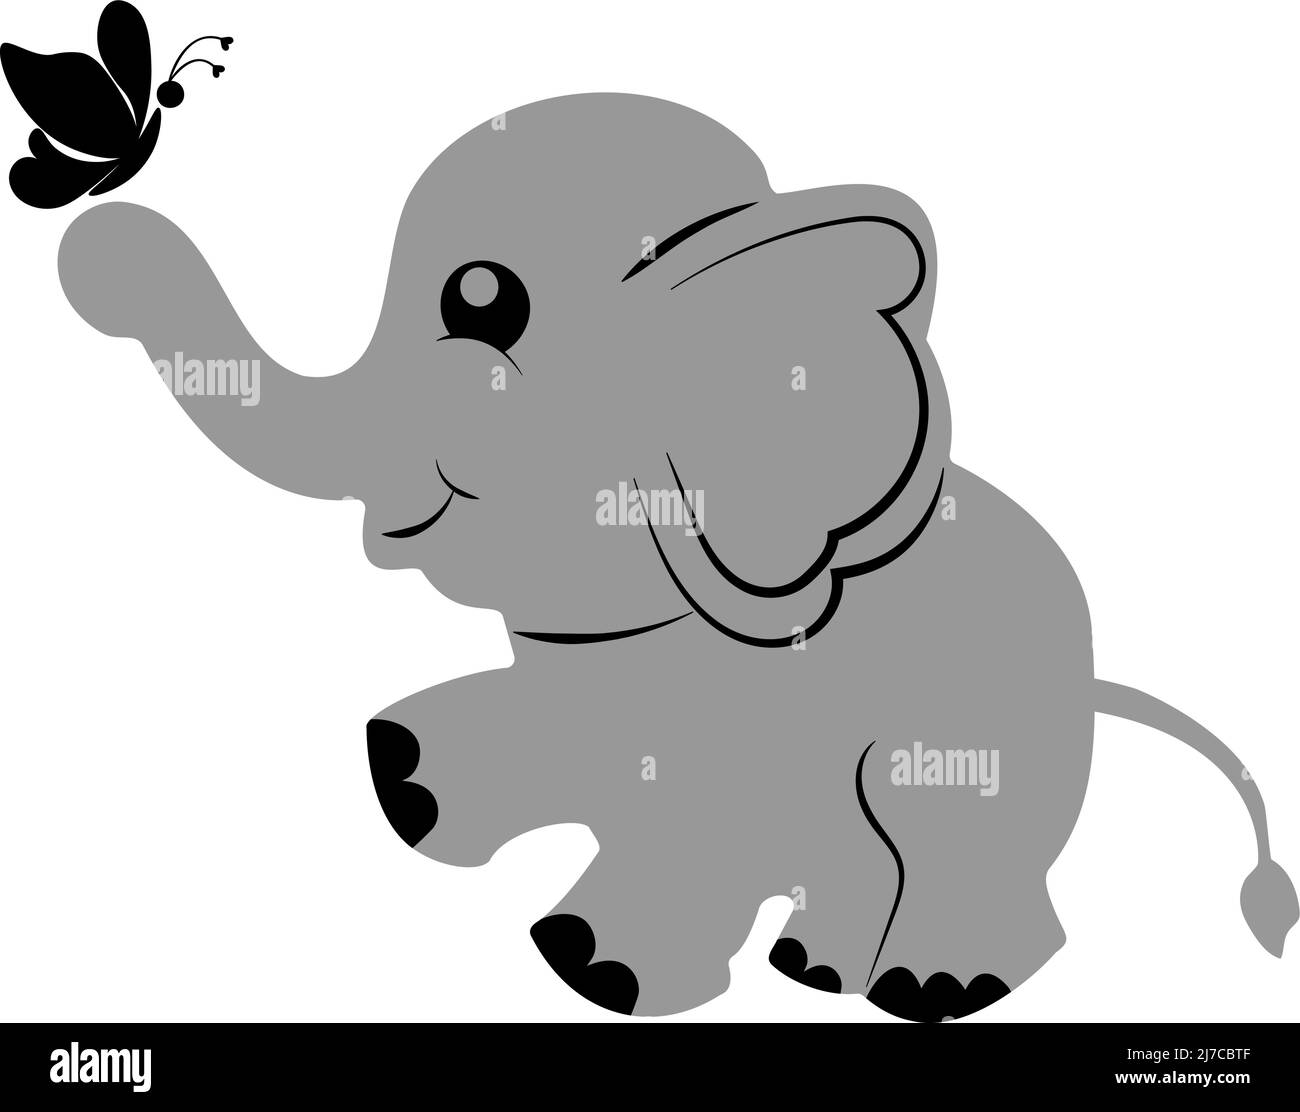 Cute elephant kawaii character vector Black and White Stock Photos ...